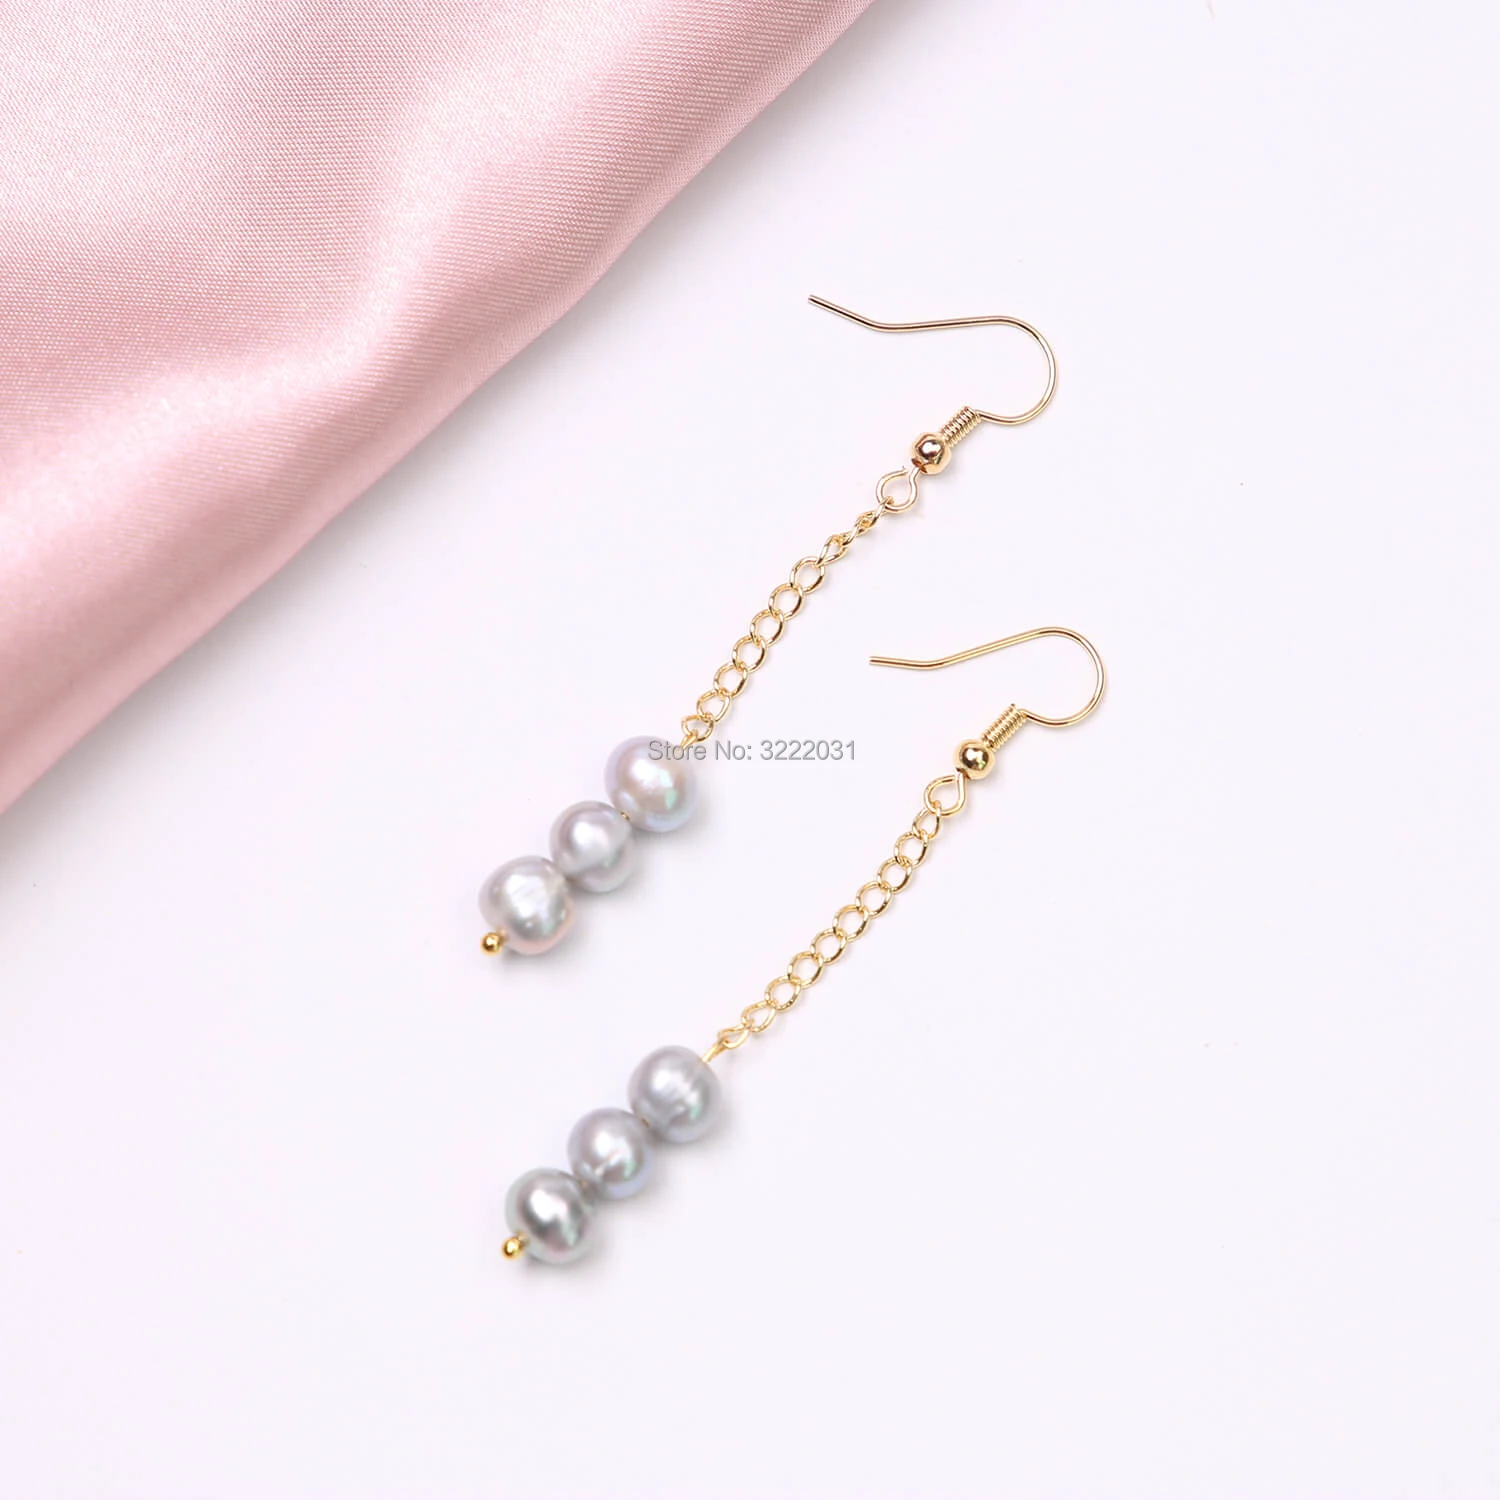 Gray Pearl Dangle Earrings Daily Small Pearls Beaded Drop Earring Jewelry  for Women Chain Charm Fashion Pearl Jewelry Handmade|Drop Earrings| -  AliExpress